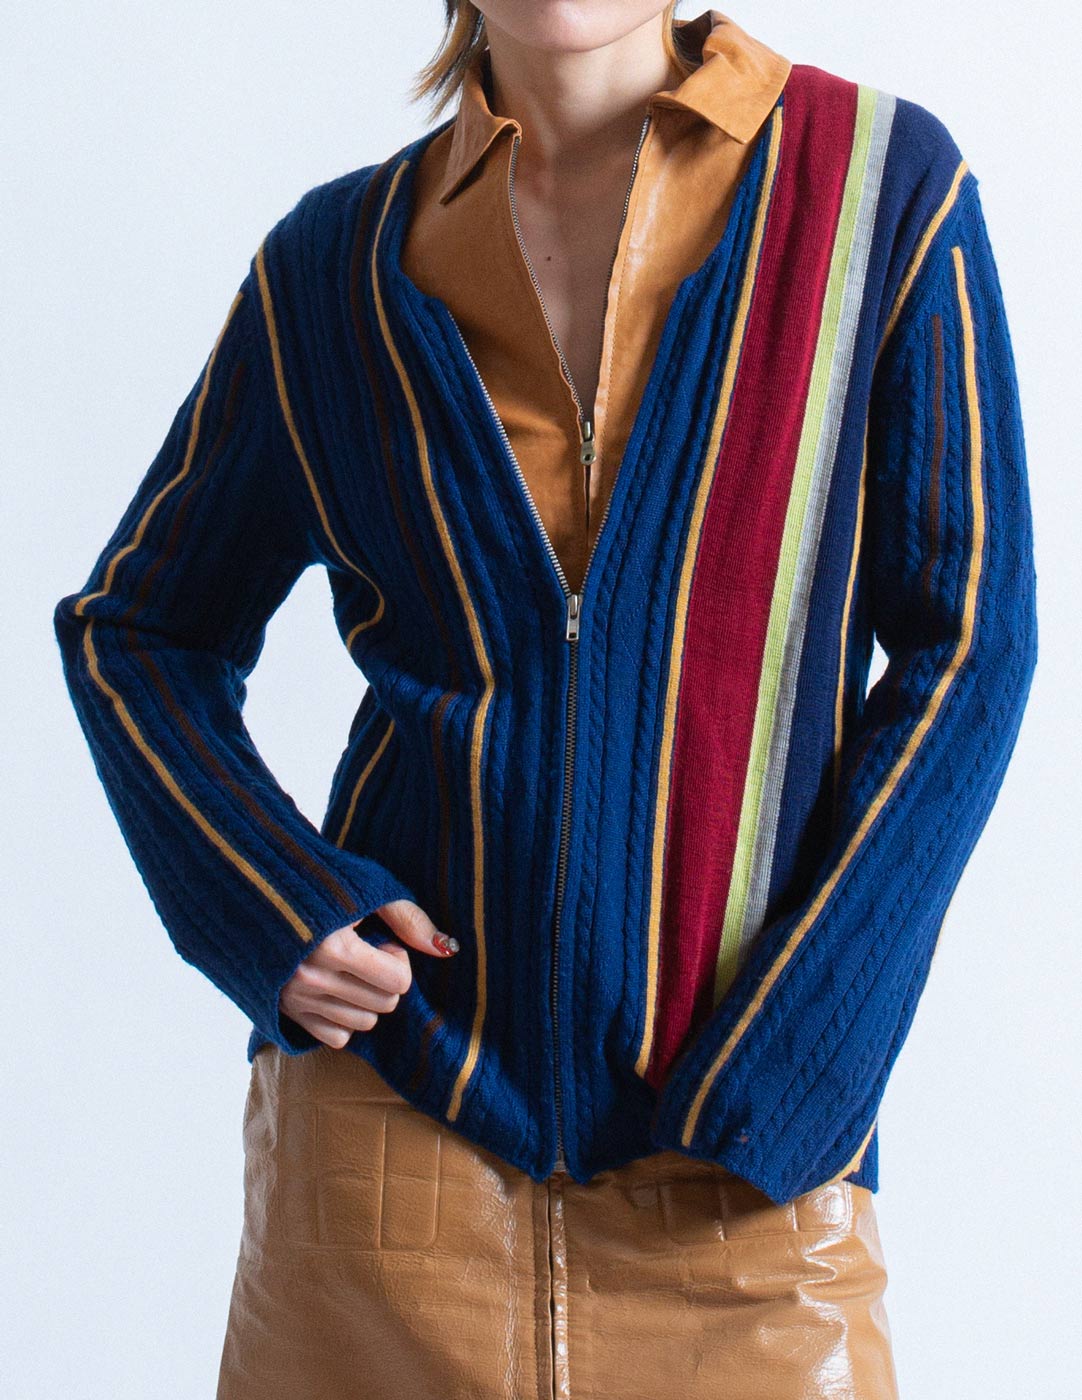 Comme des Garçons Homme vintage cobalt striped zip cardigan front detail